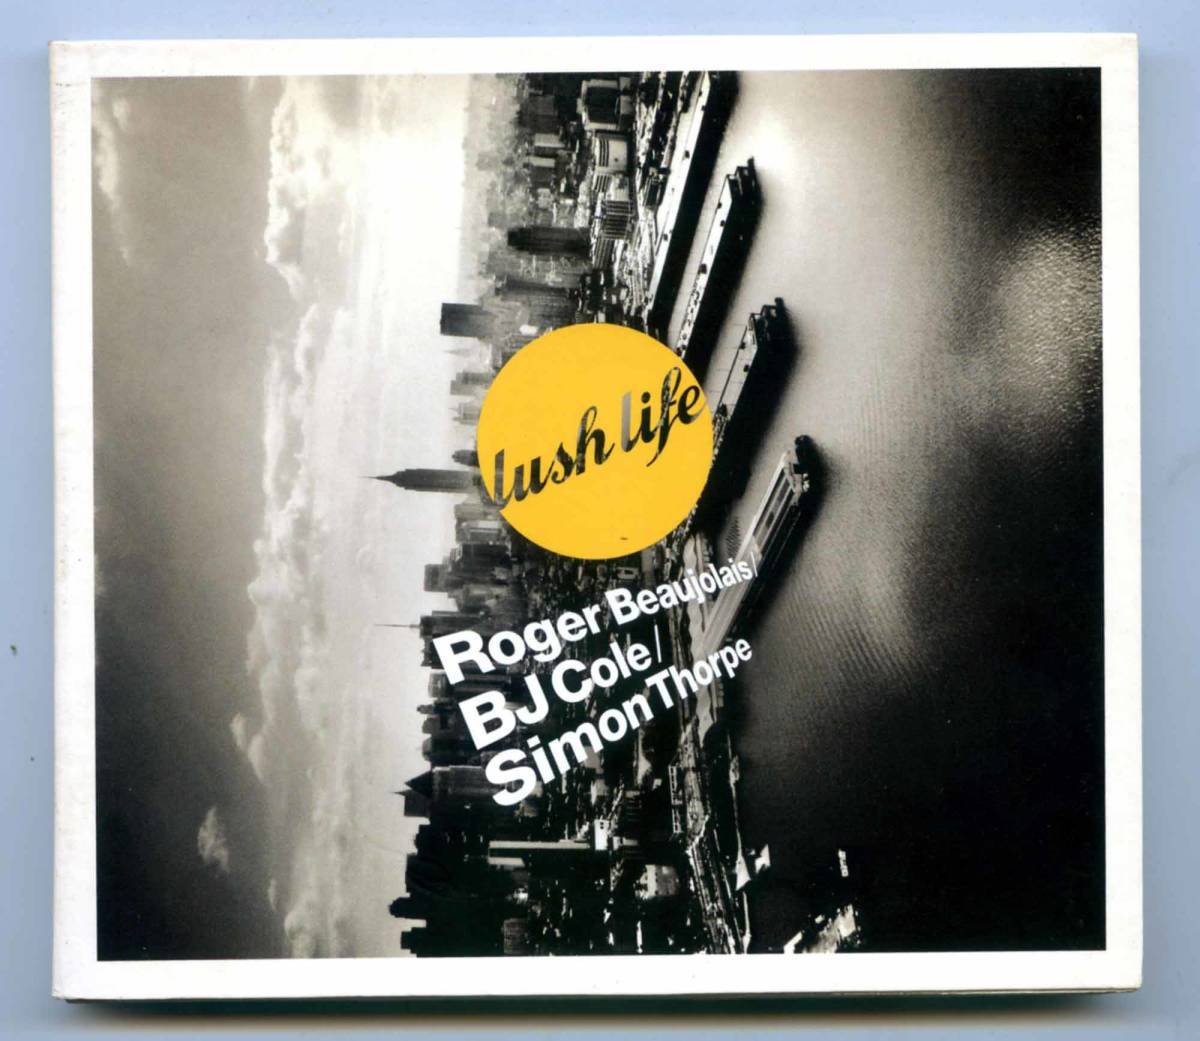 LushLife（ラッシュライフ=Roger Beaujolais, Simon Thorpe & BJ Cole）CD「Lush Life」UK限定盤 UALL0001 UKジャズ ほぼ新品_画像1